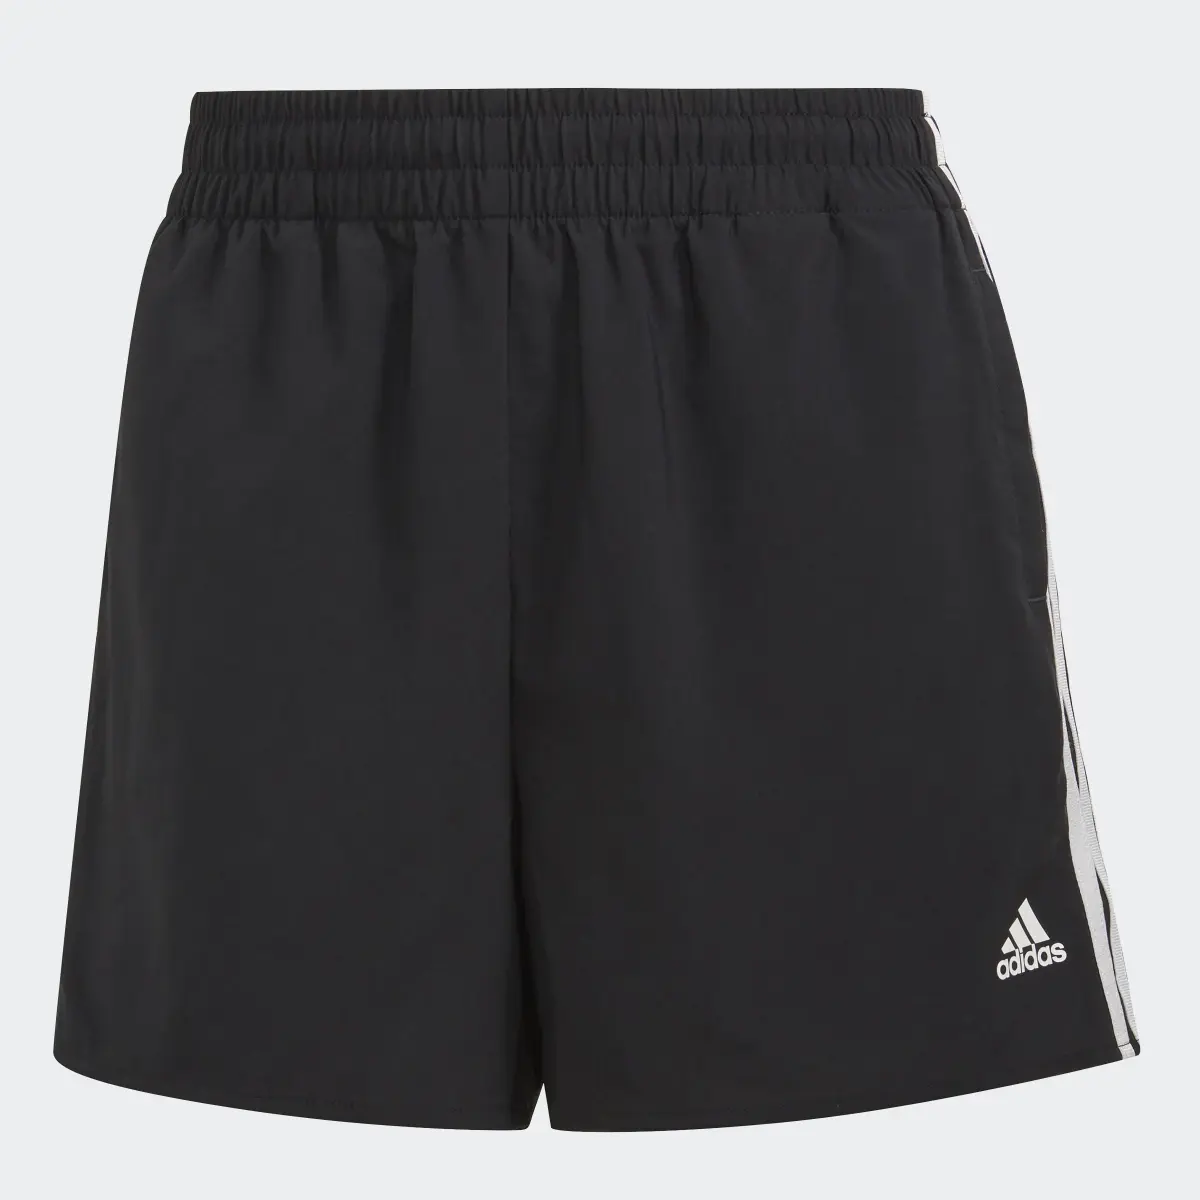 Adidas Shorts Primeblue Designed 2 Move 3 Rayas Tejidos Sport. 1